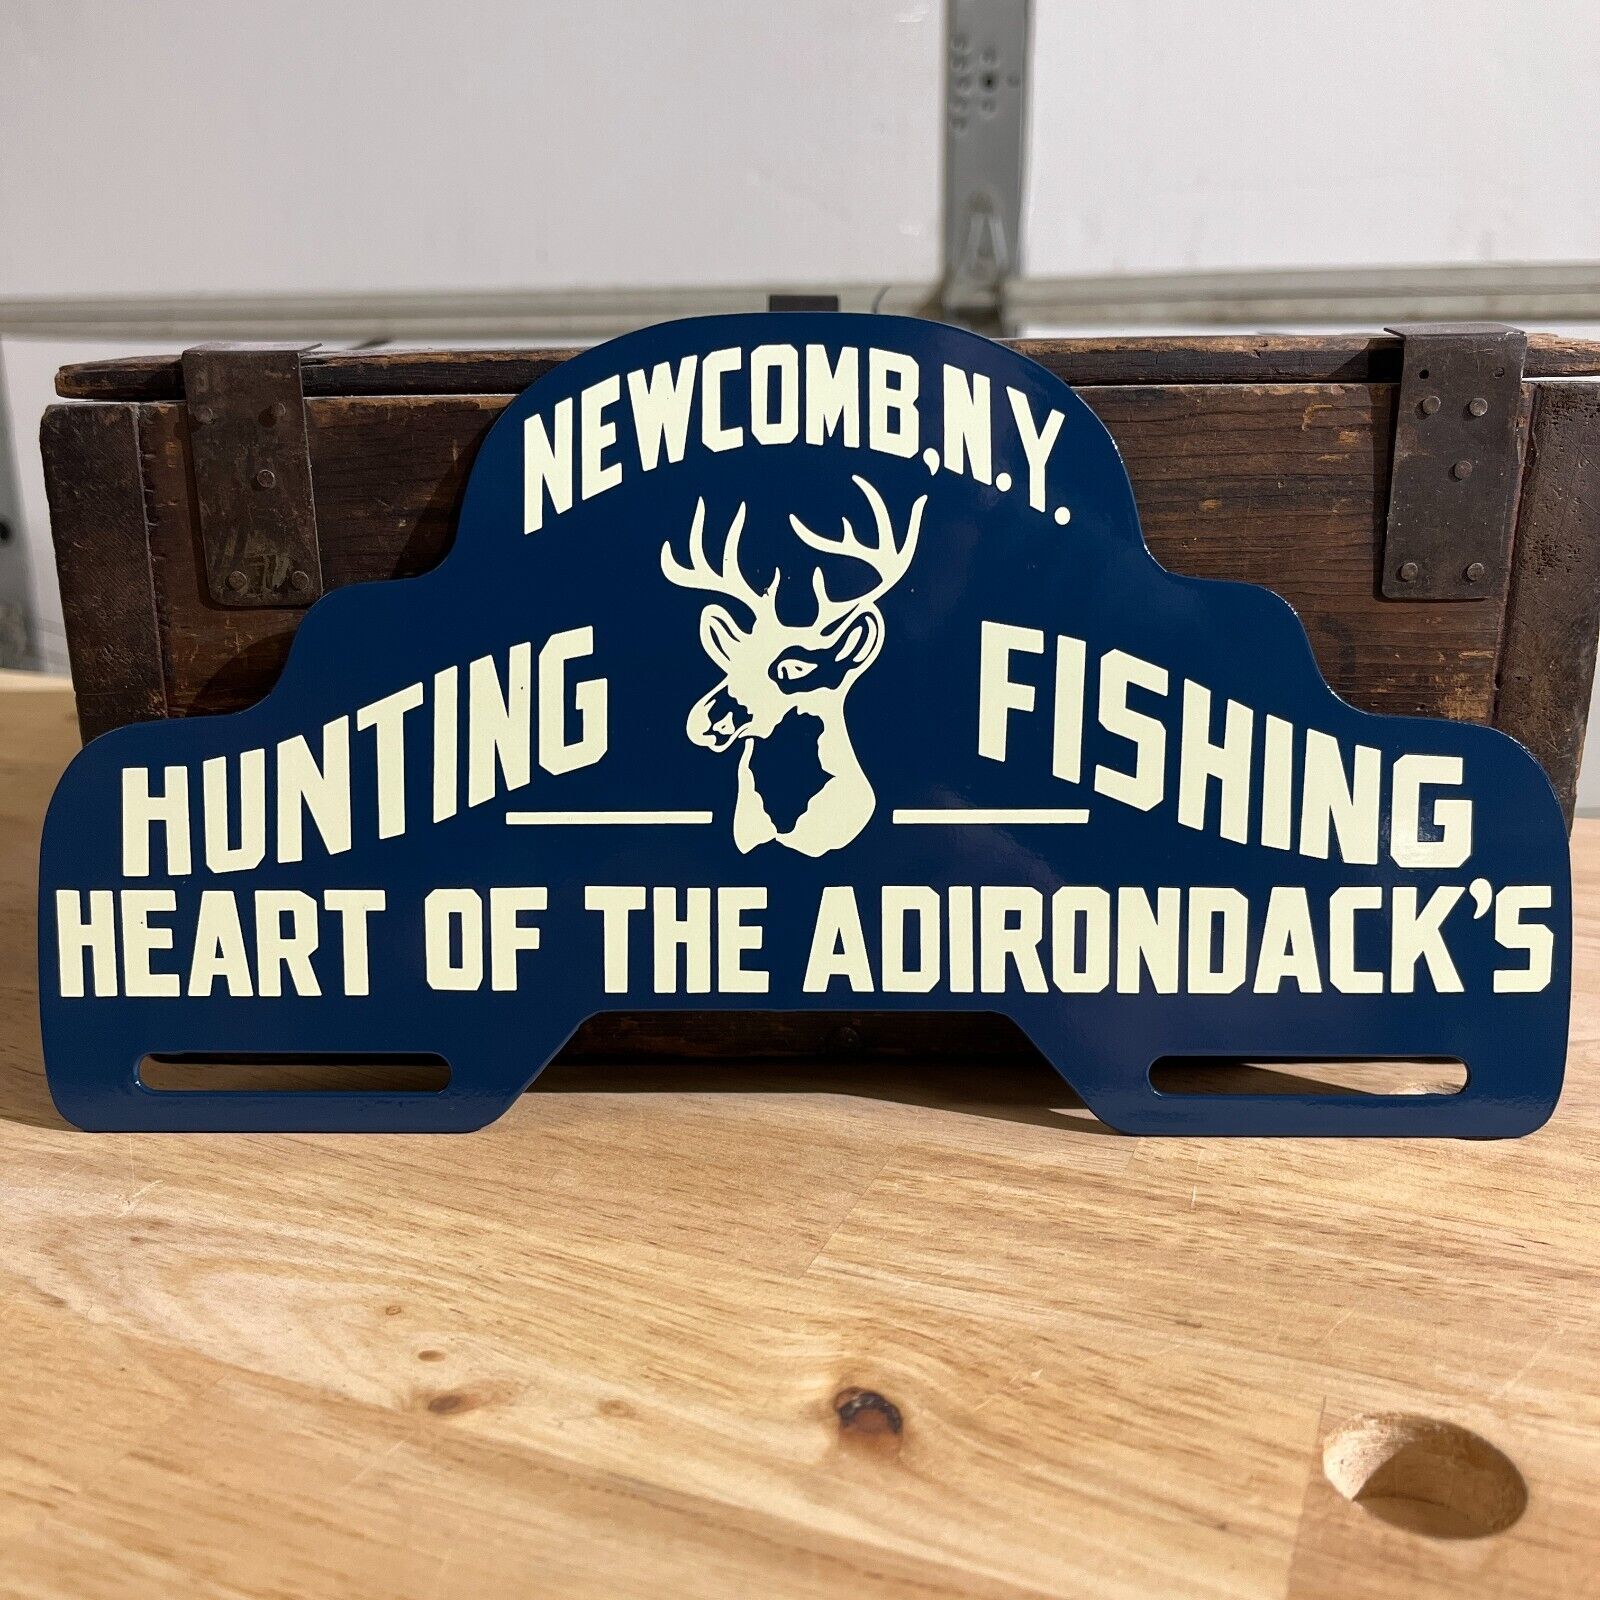 Newcomb New York Hunting Fishing Metal License Plate Tag Topper Sign Adirondacks